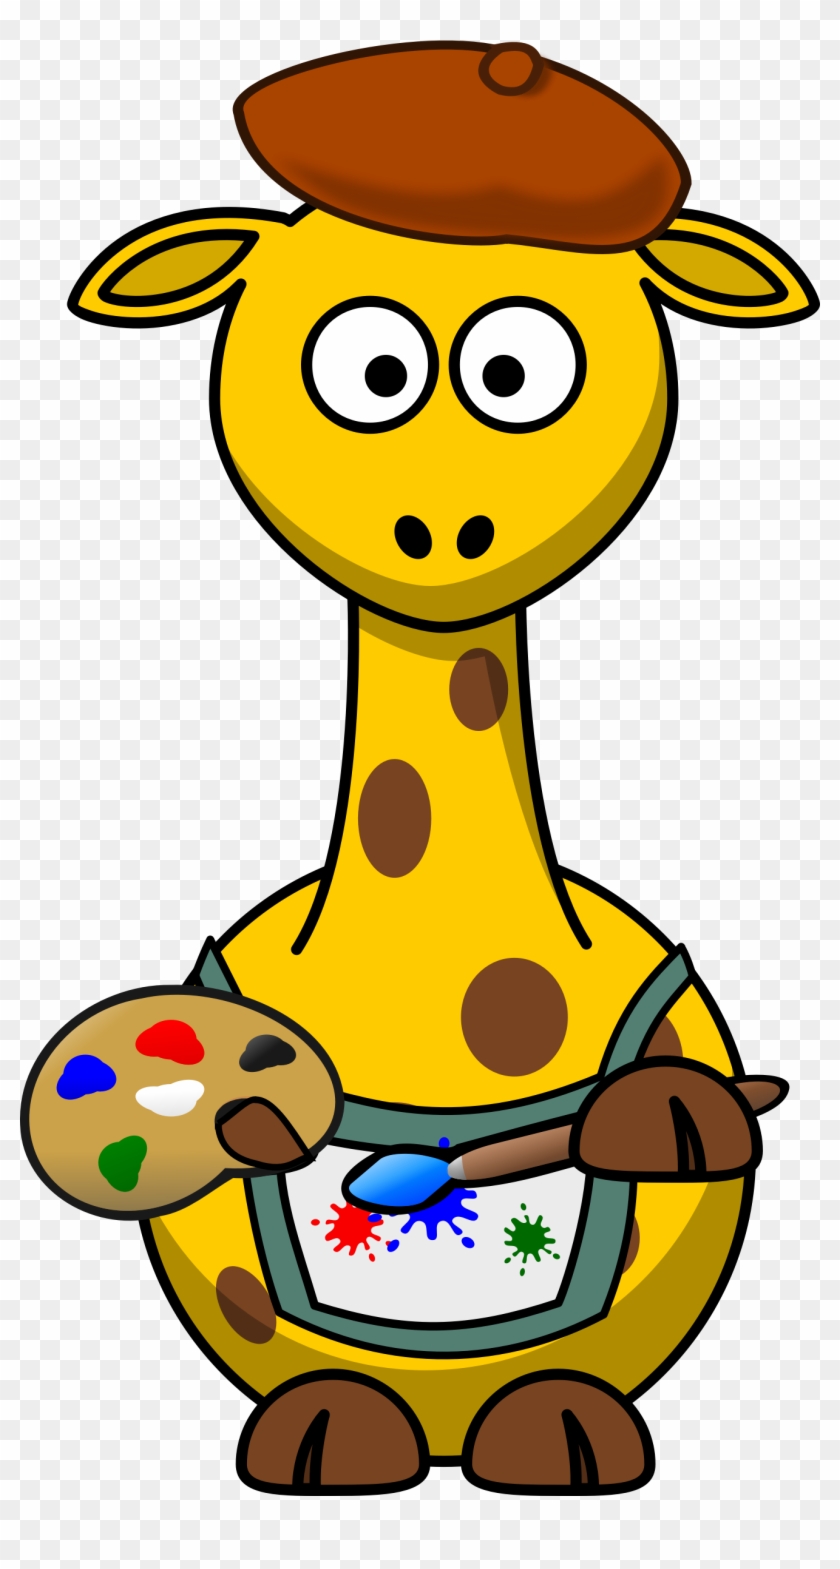 Free Comic Characters - Cartoon Giraffe #217143